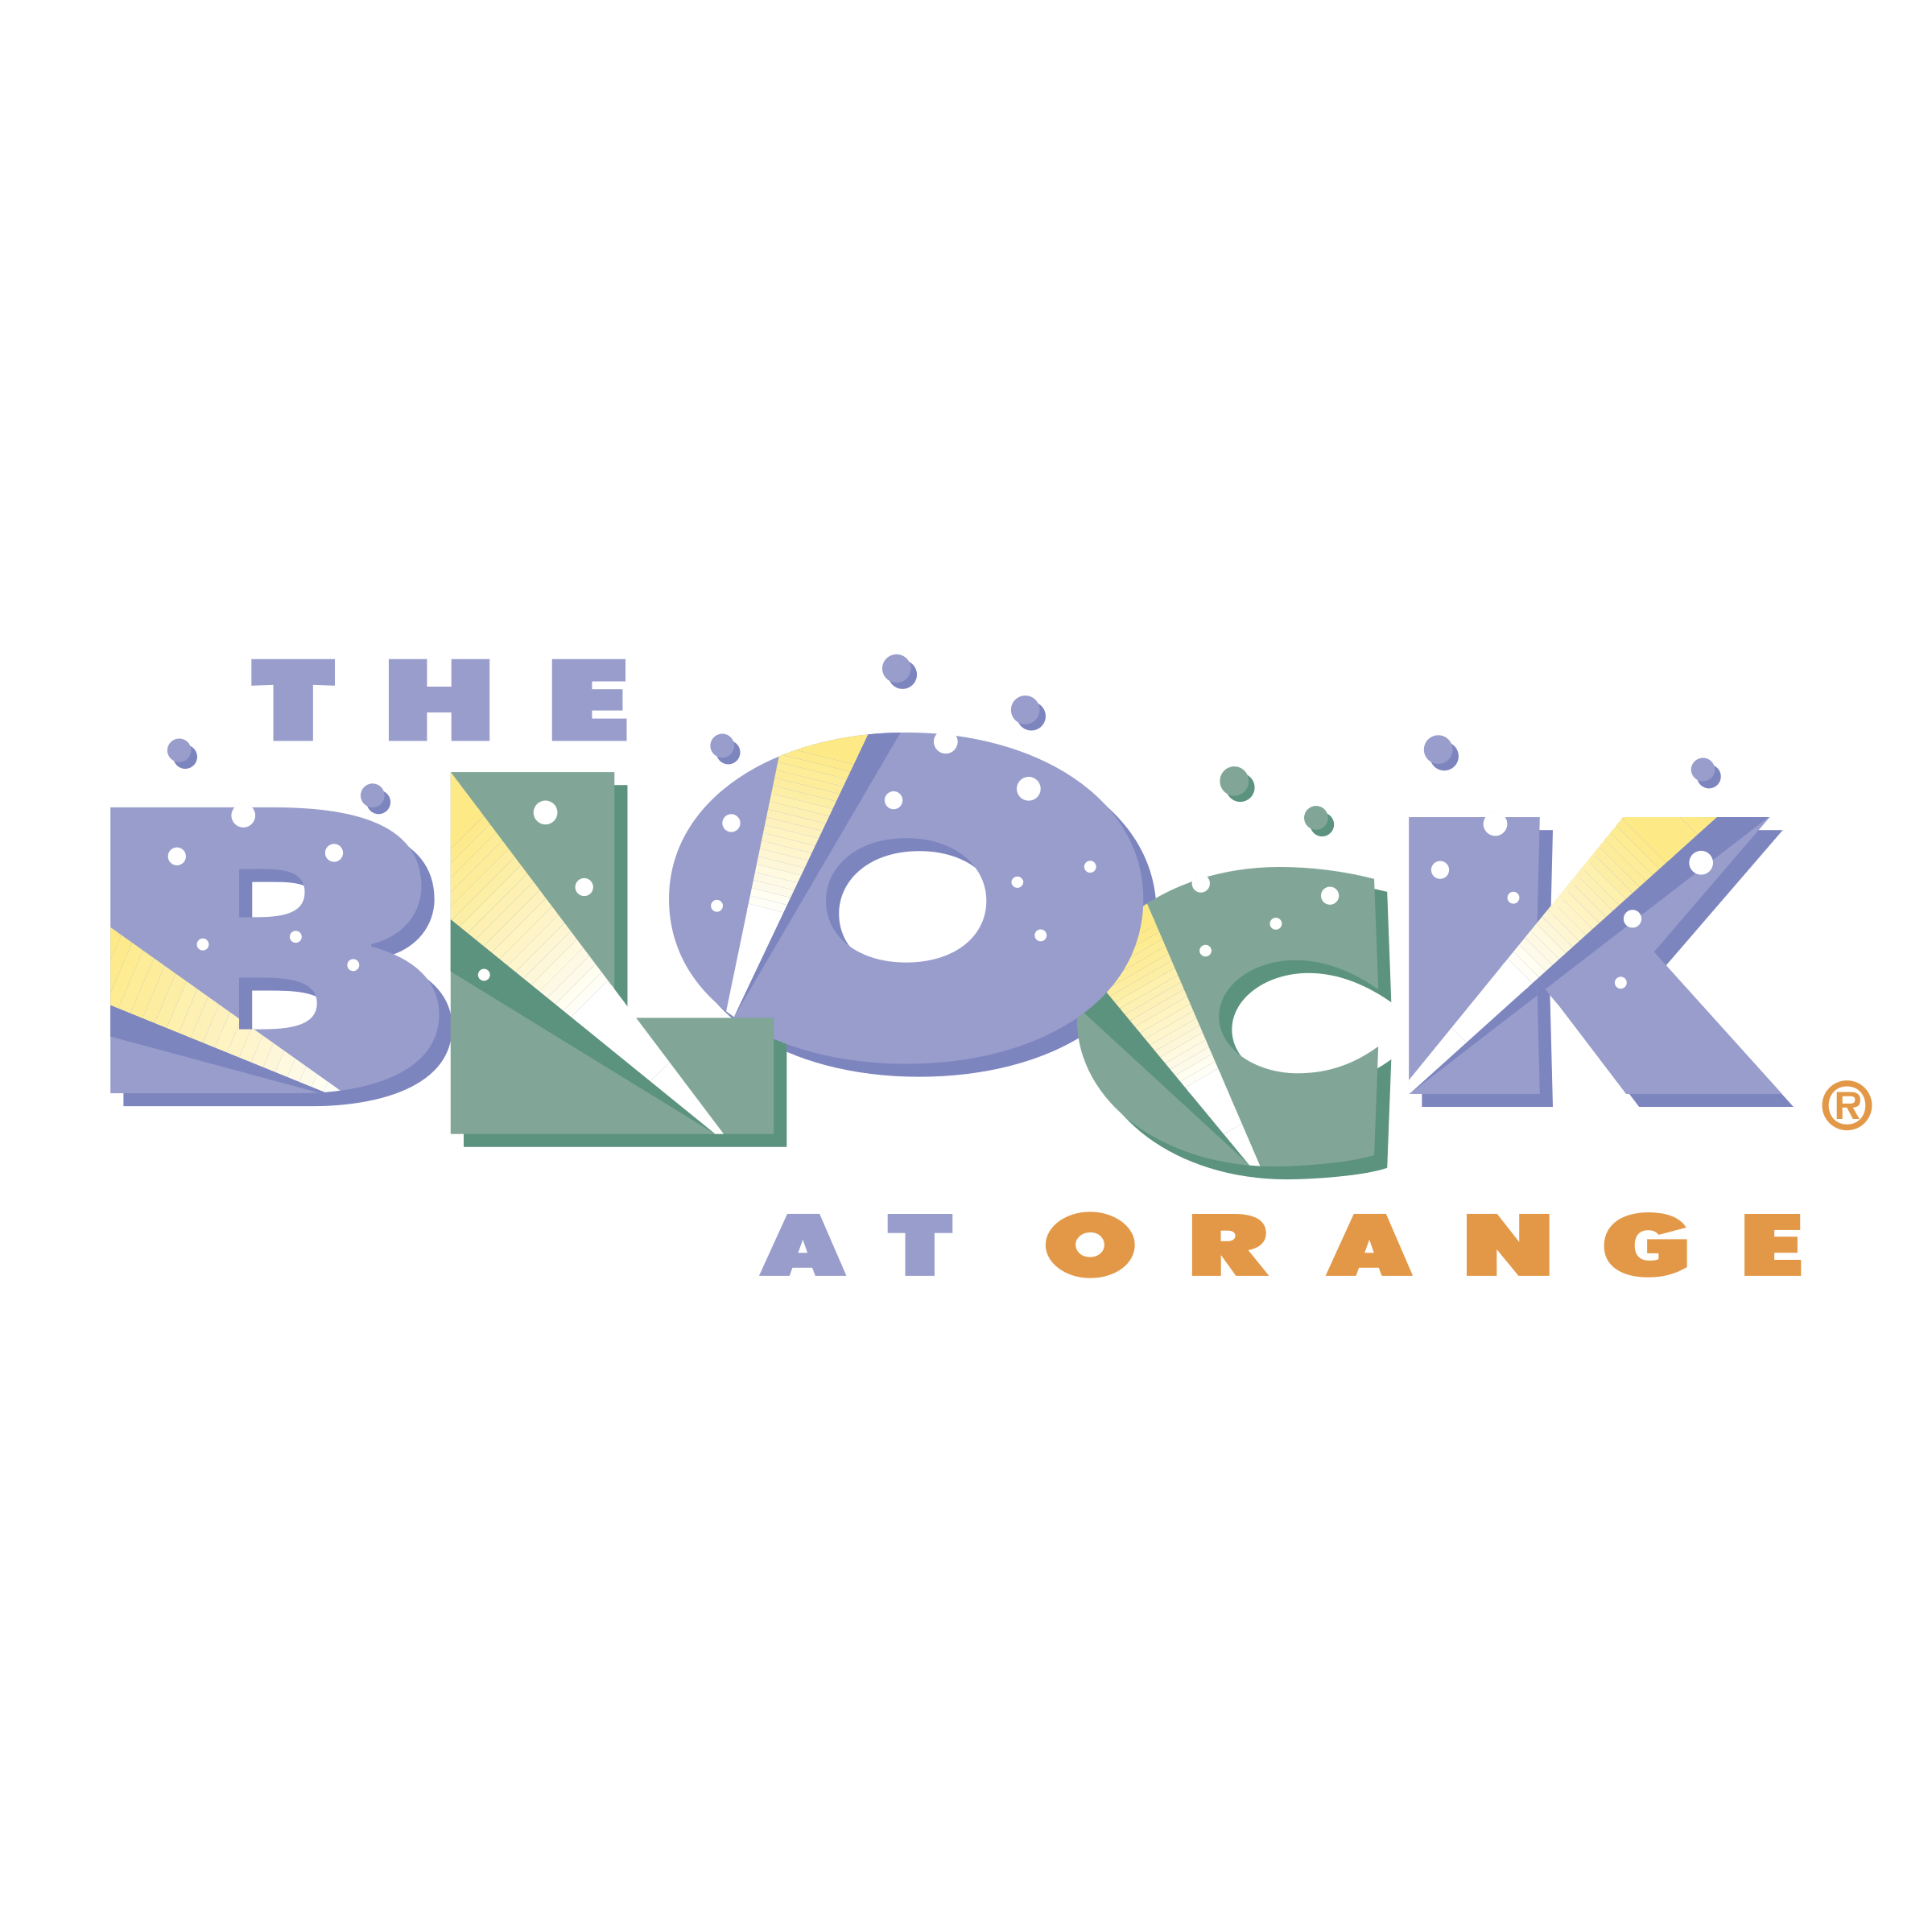 Orange Block Logo - The Block at Orange Logo PNG Transparent & SVG Vector - Freebie Supply